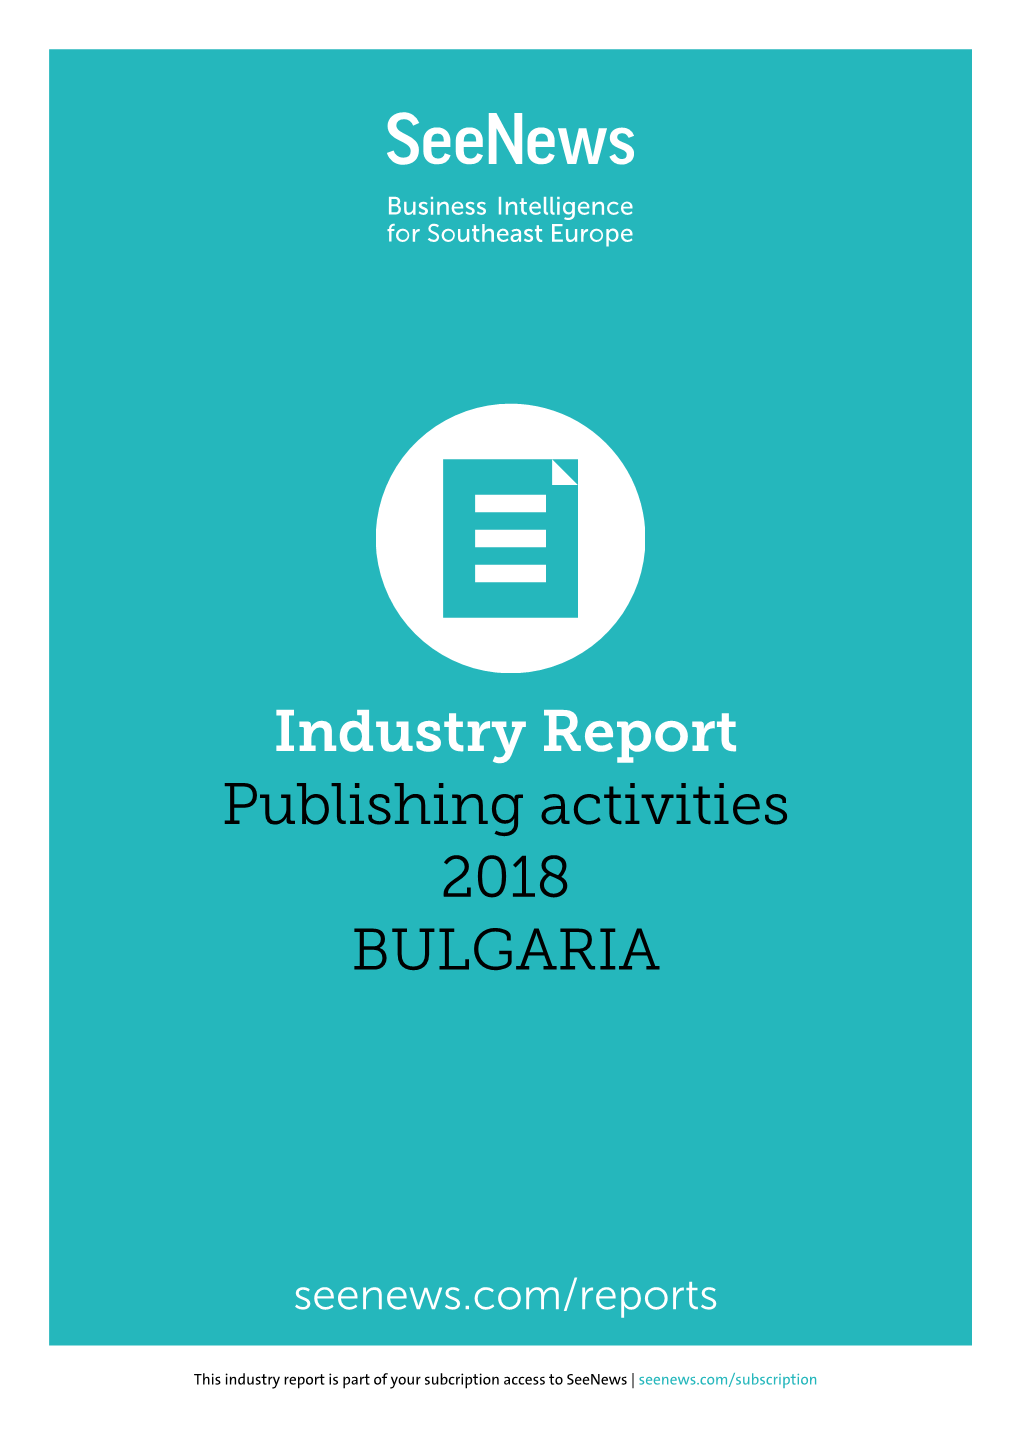 Industry Report Publishing Activities 2018 BULGARIA